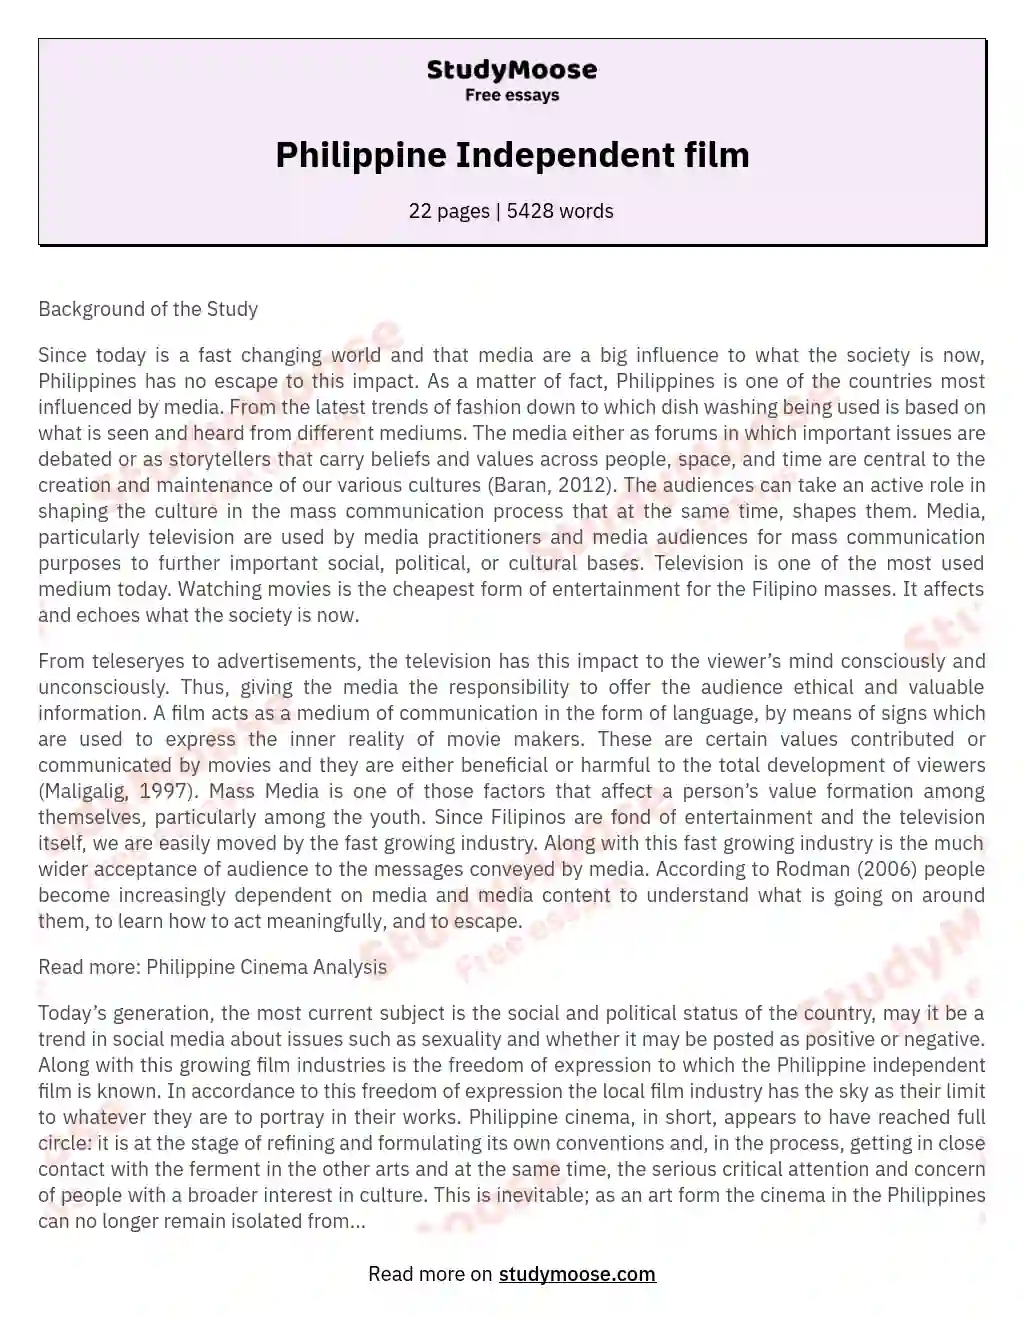 Philippine Independent film essay